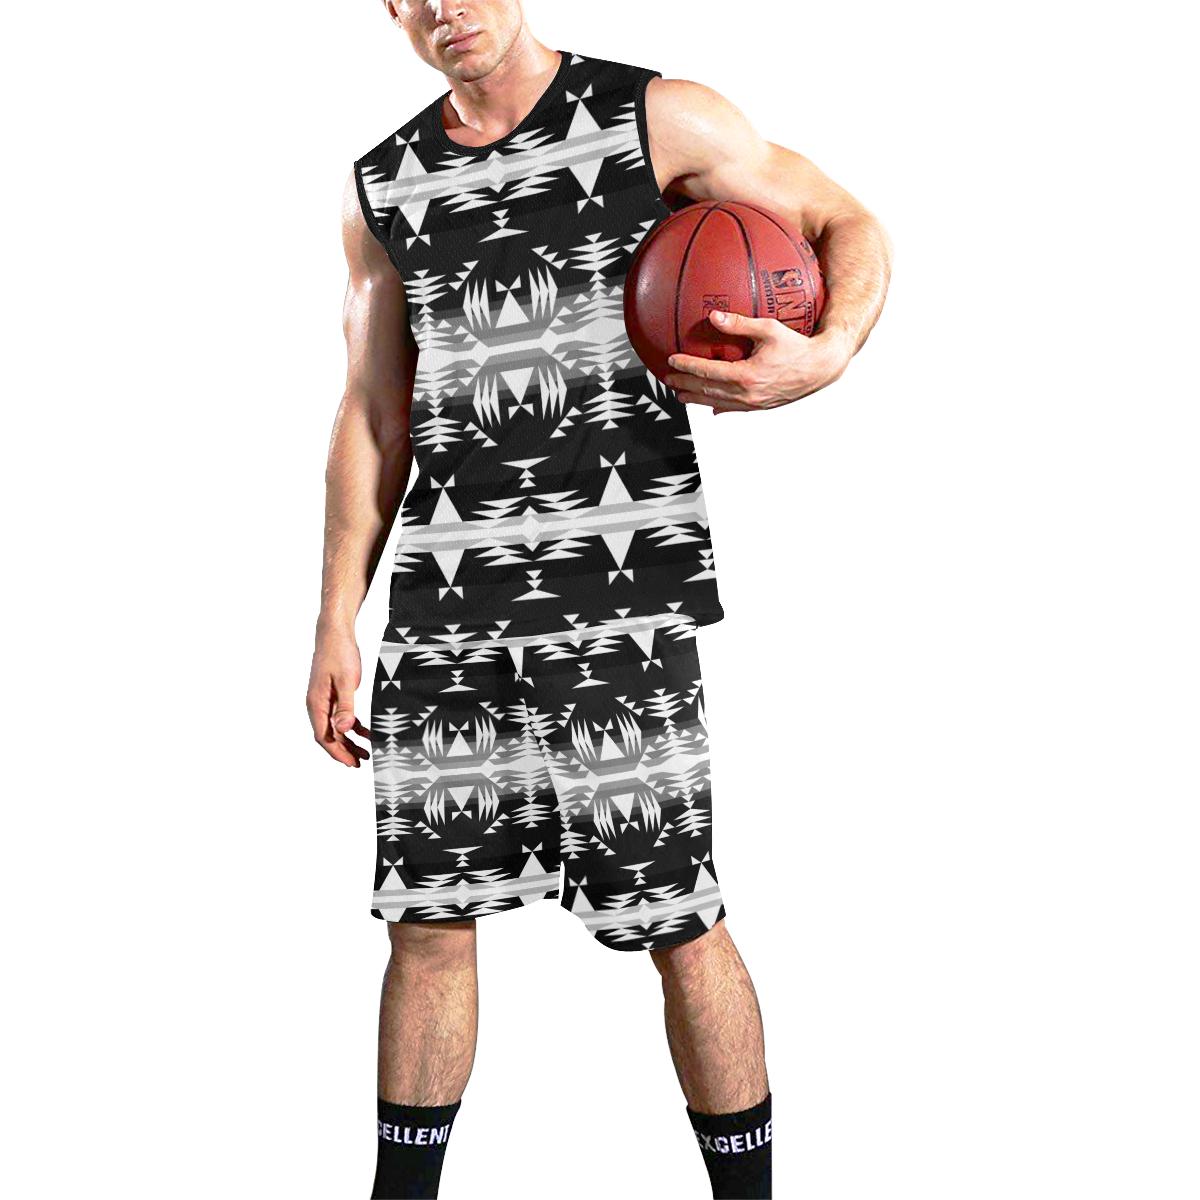 e-joyer Between The Mountains Black and White Basketball Uniform XL